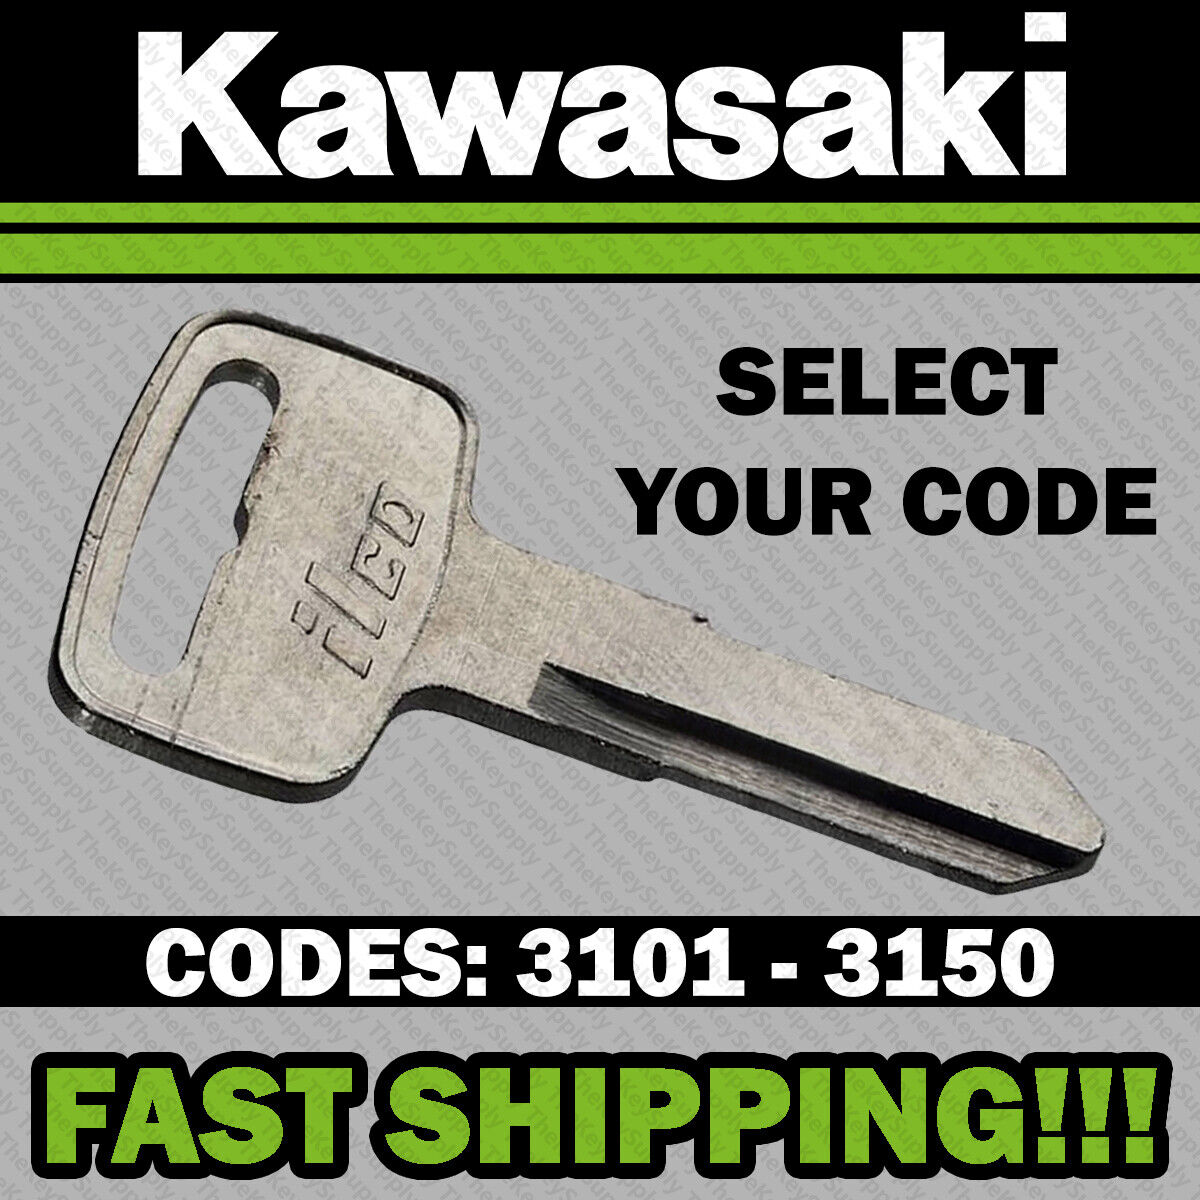 Kawasaki keys Teryx Mule Cut to Code replacement key made to codes 3101-3150